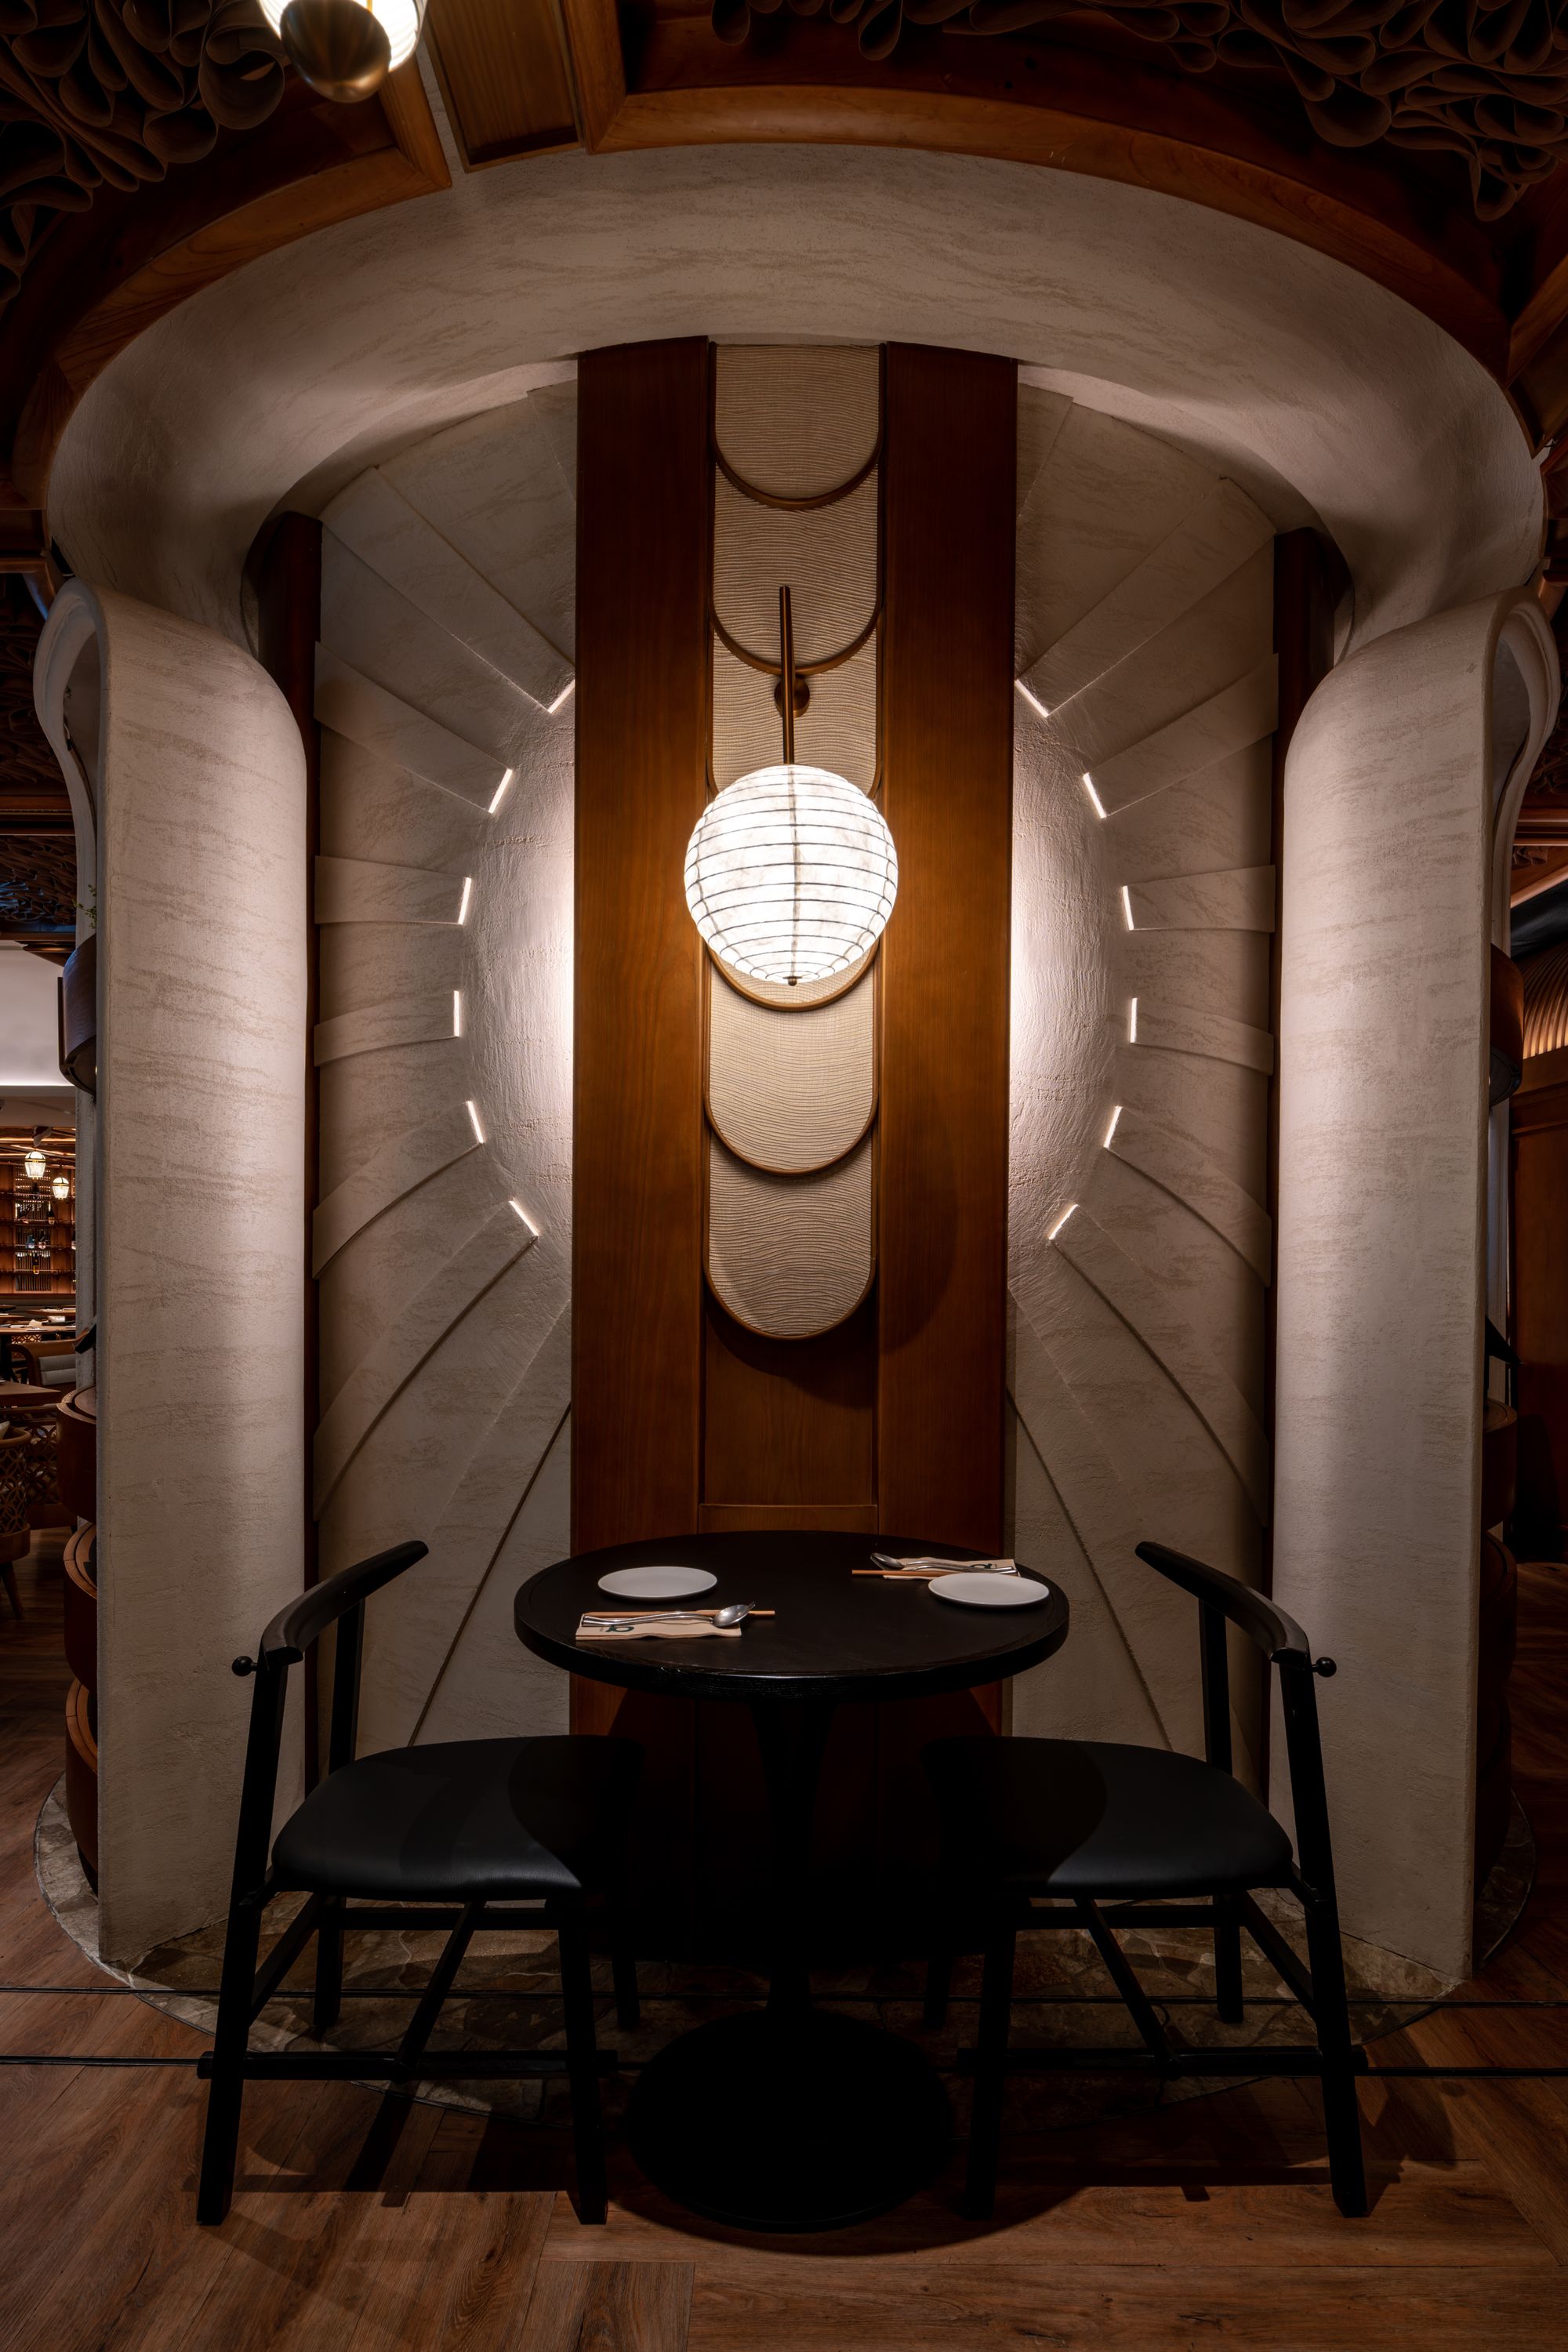 图片[6]|Que Restaurant at the Elements|ART-Arrakis | 建筑室内设计的创新与灵感